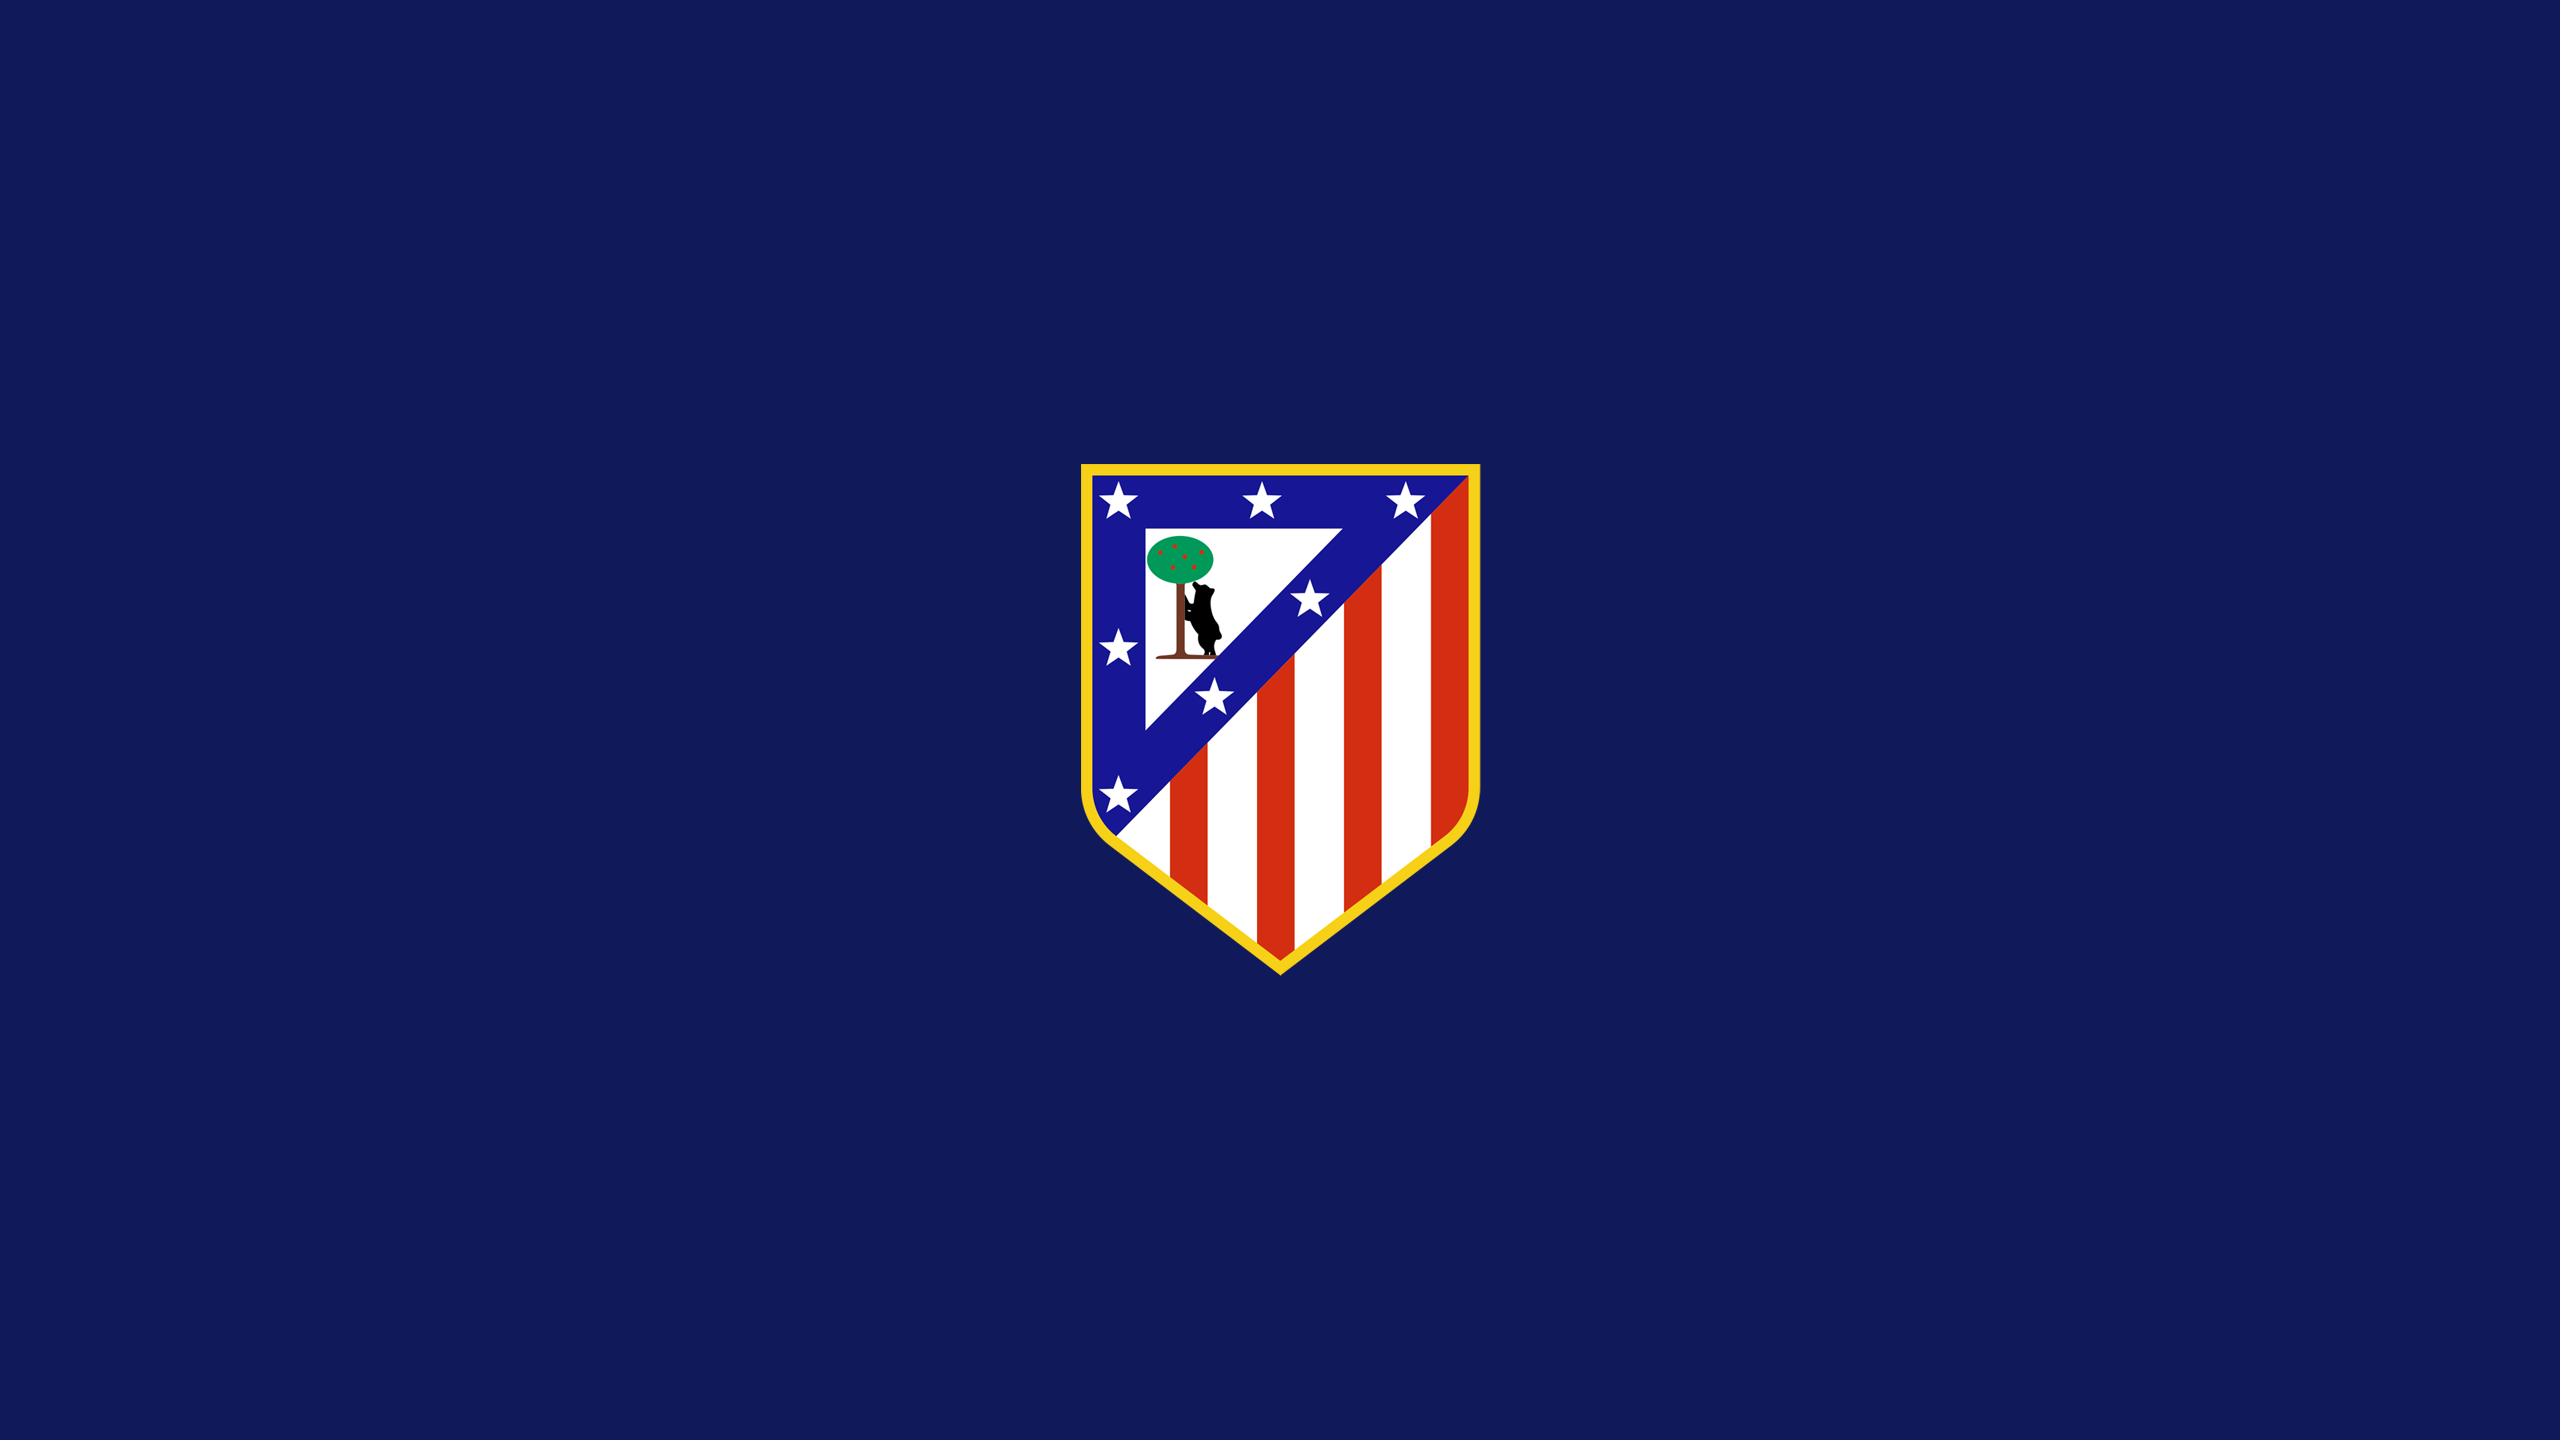 atletico madrid wallpaper hd,blu elettrico,font,bandiera,emblema,grafica